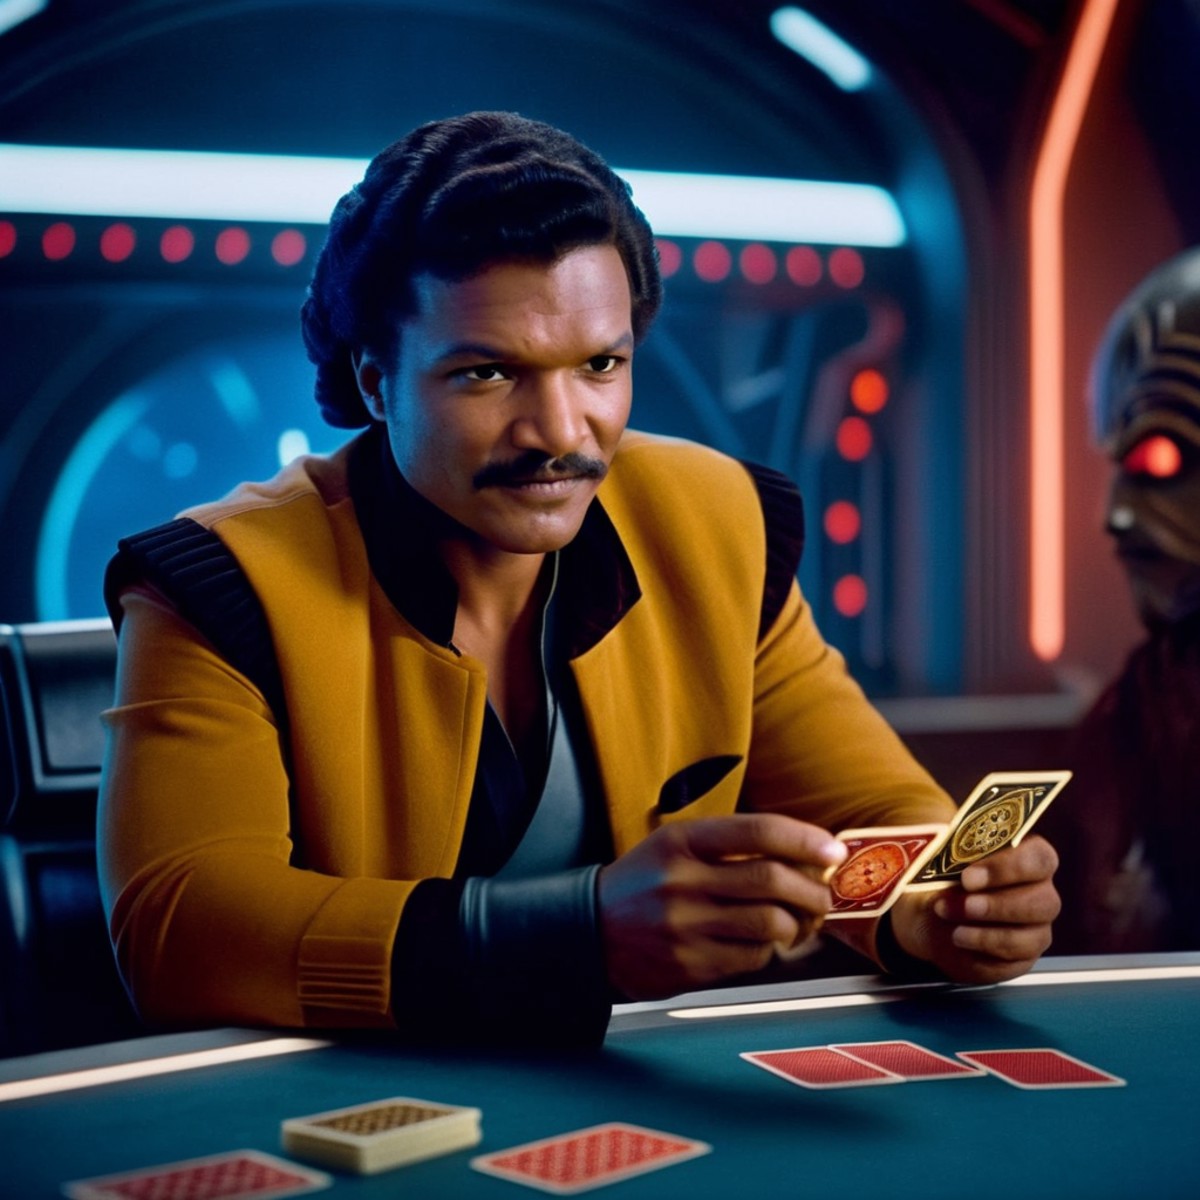 cinematic film still of  <lora:Lando Calrissian:1.2>
Lando Calrissian a man sitting at a table with a card game in star wa...